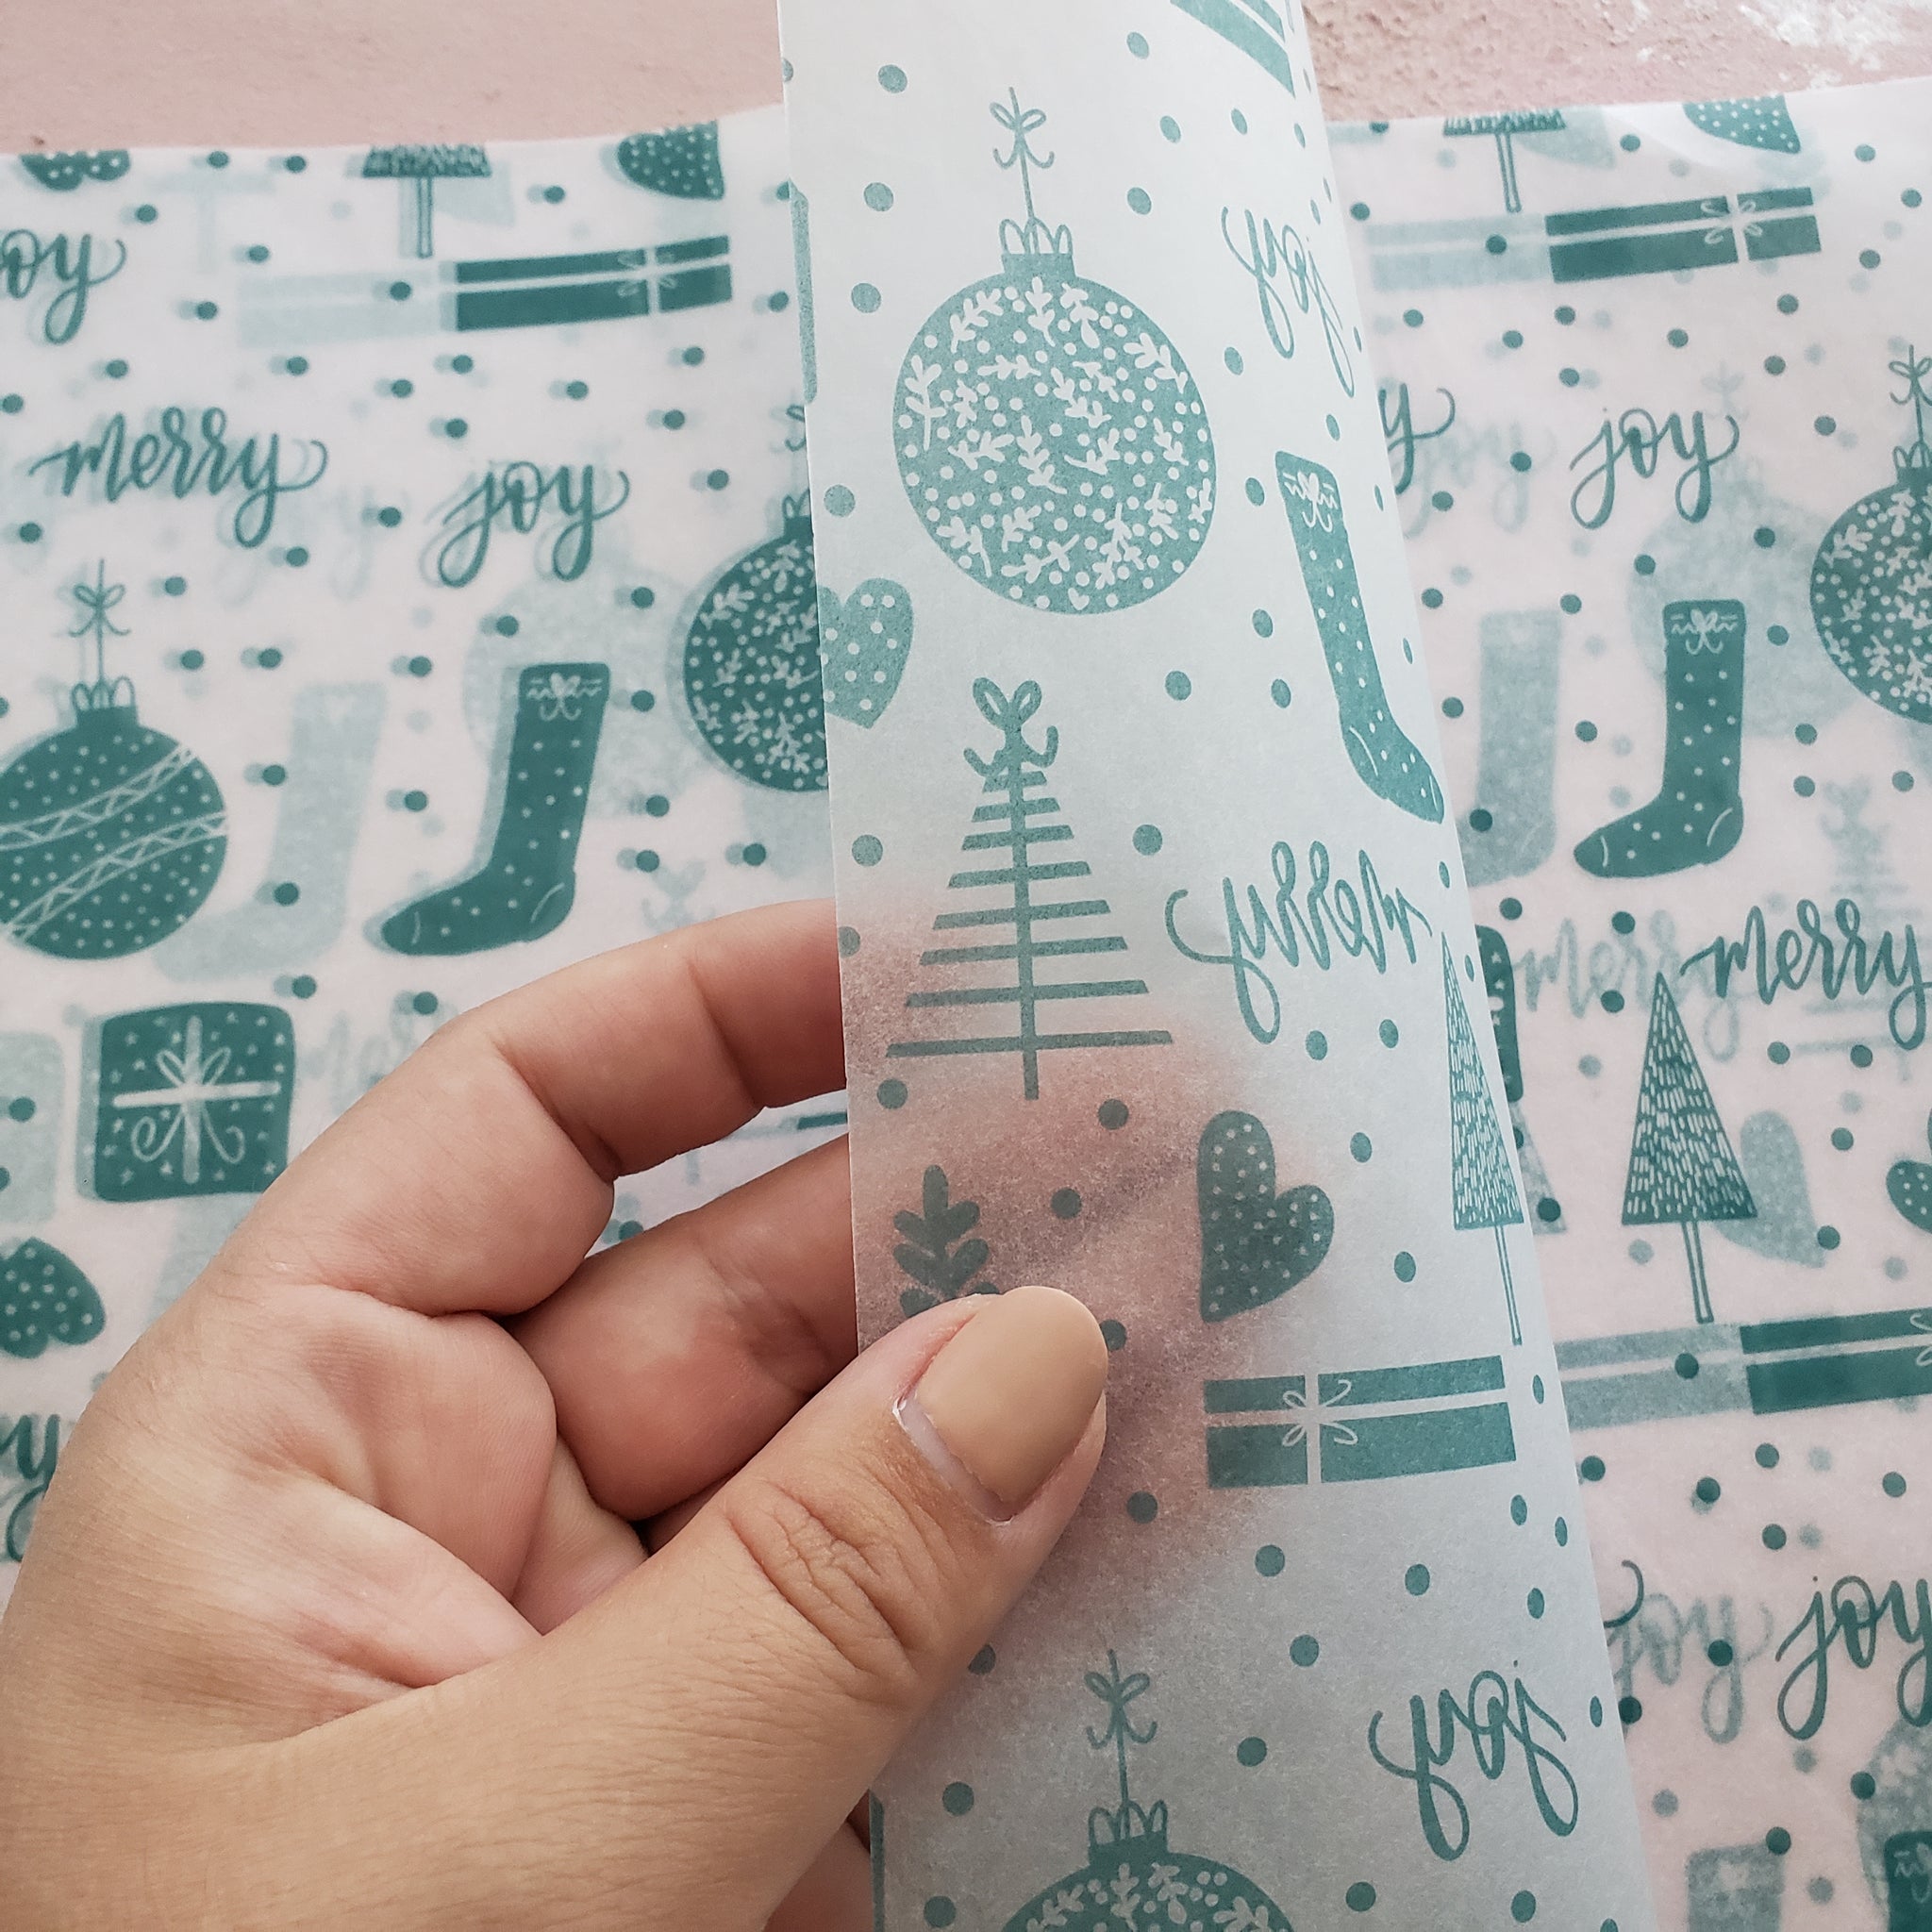 Christmas Tissue Paper